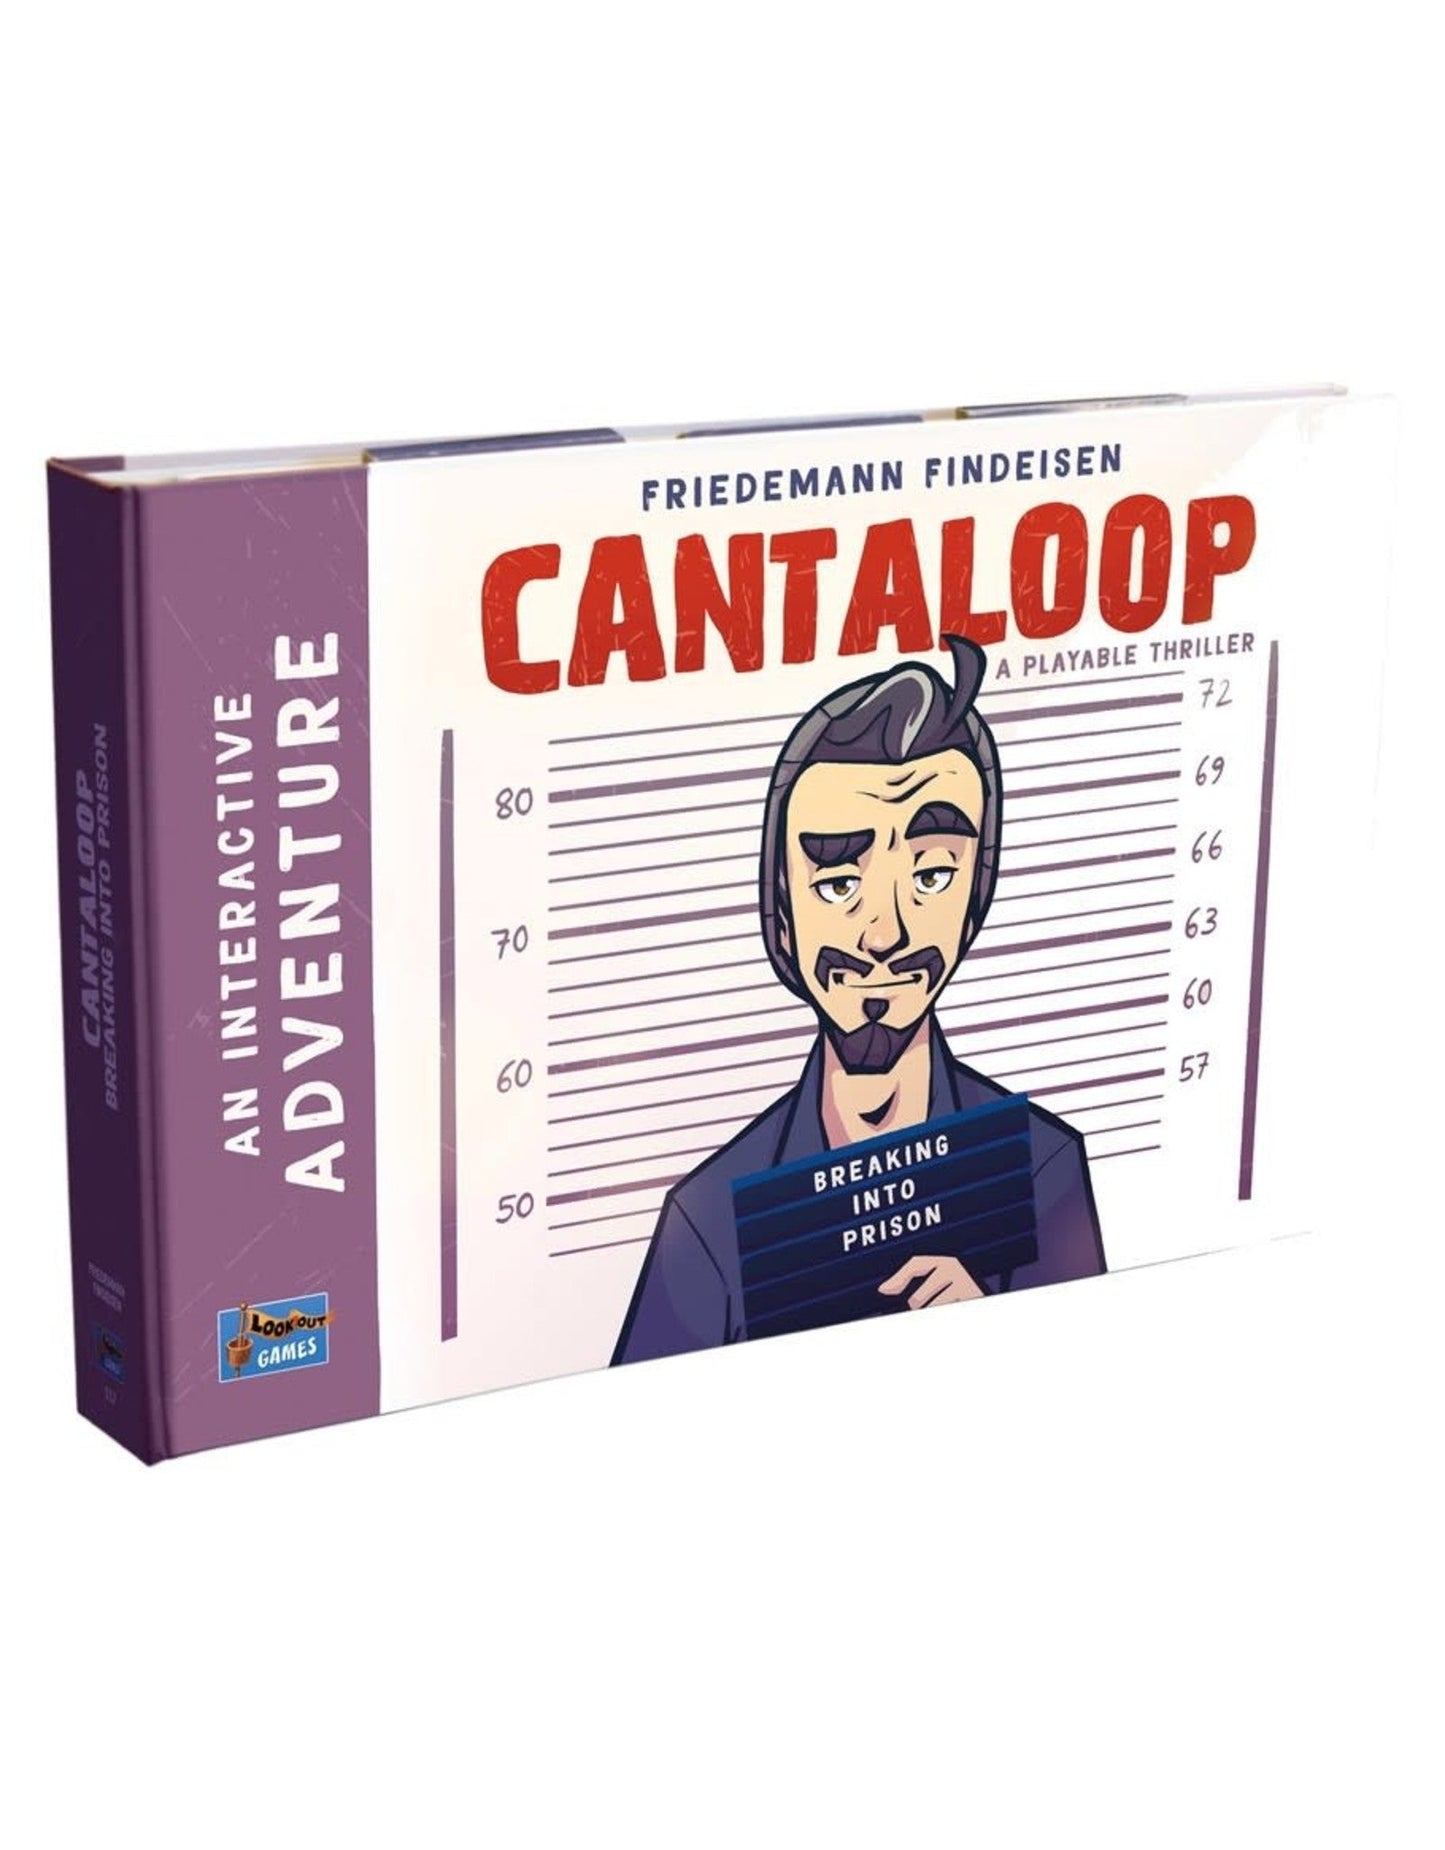 (BSG Certified USED) Cantaloop - Book 1: Breaking Into Prison